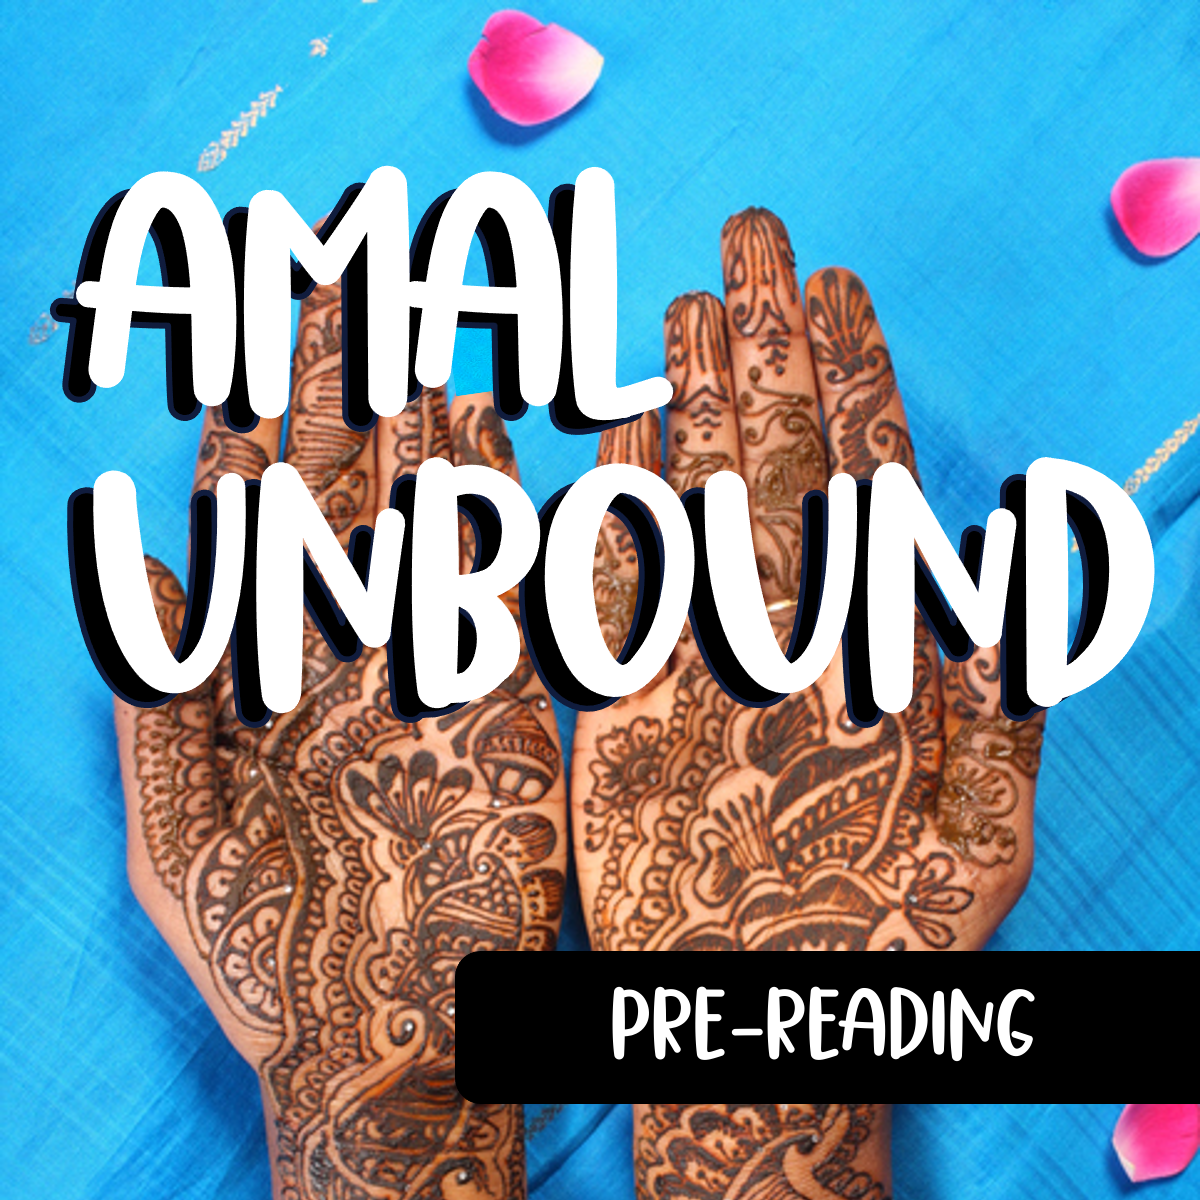 Amal Unbound Pre-Reading Resources